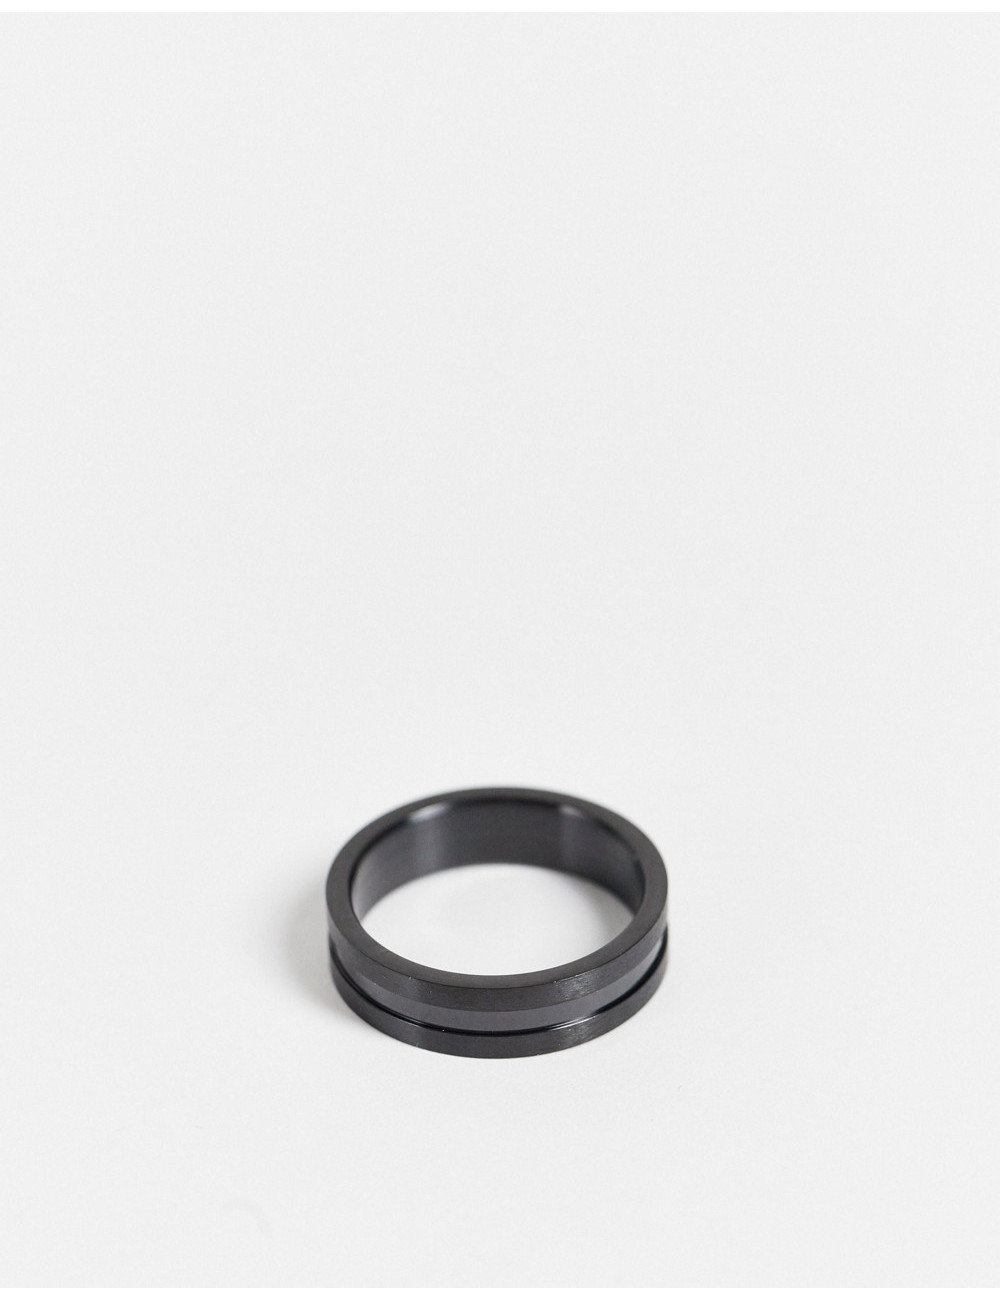 Burton black steel band ring